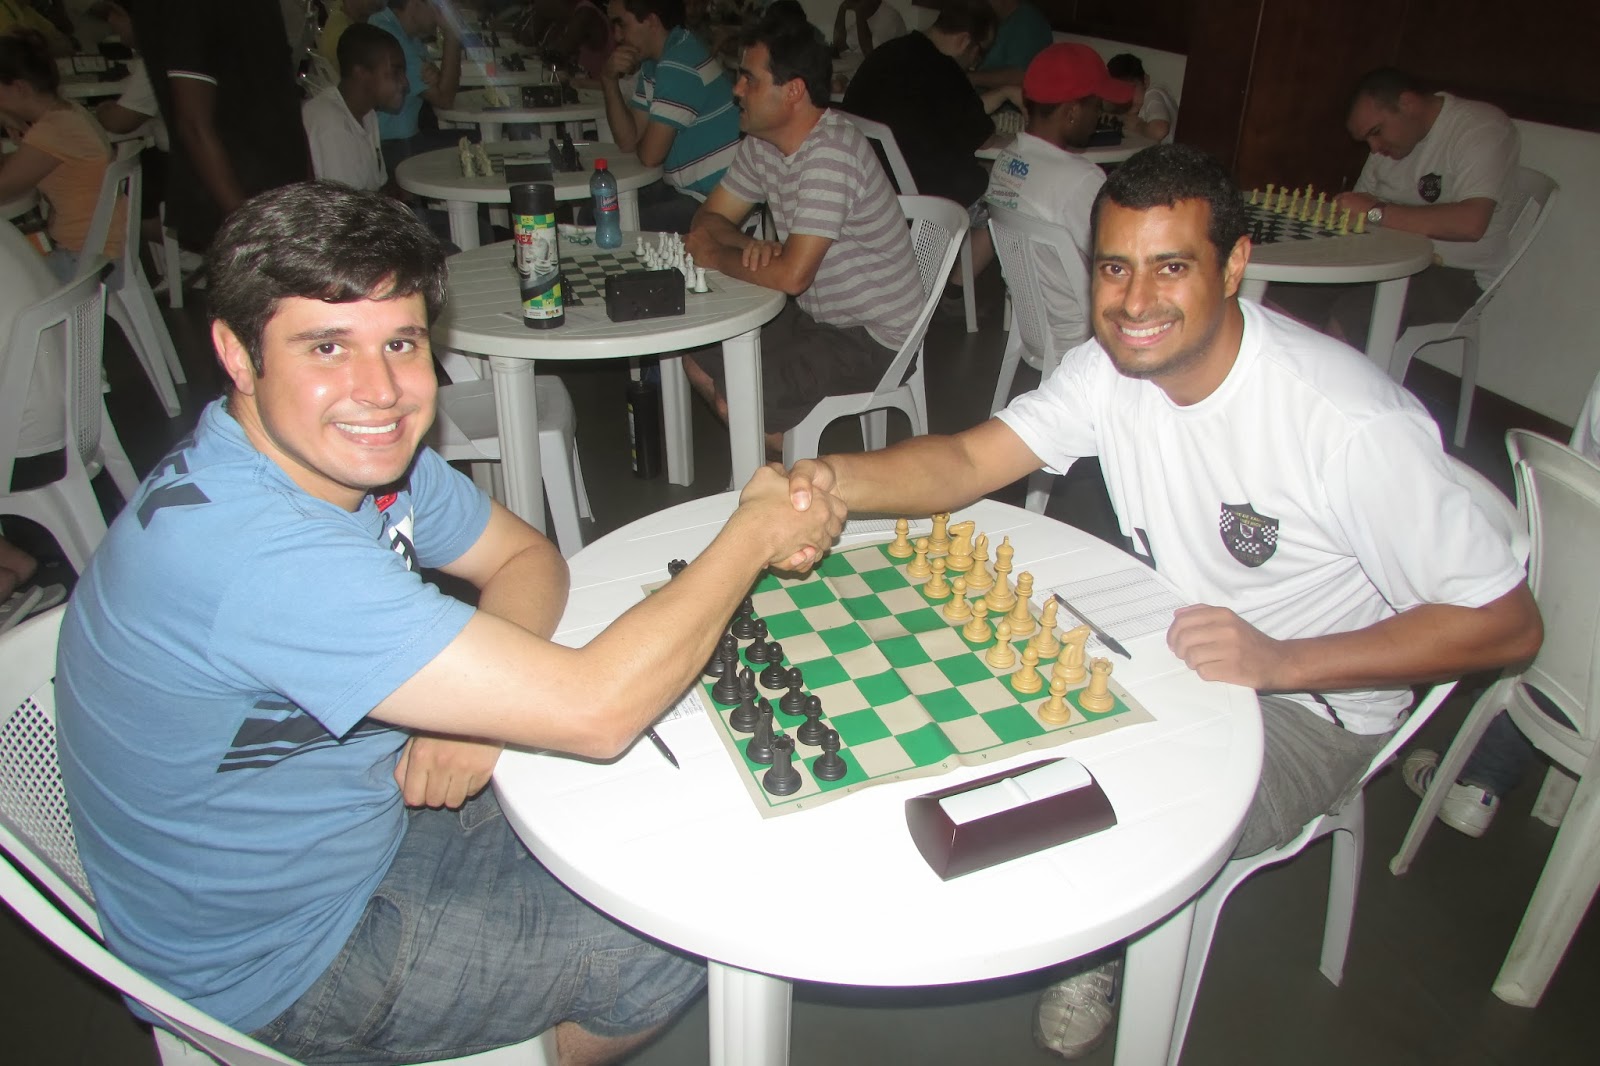 Clube de Xadrez de Três Rios: abril 2013